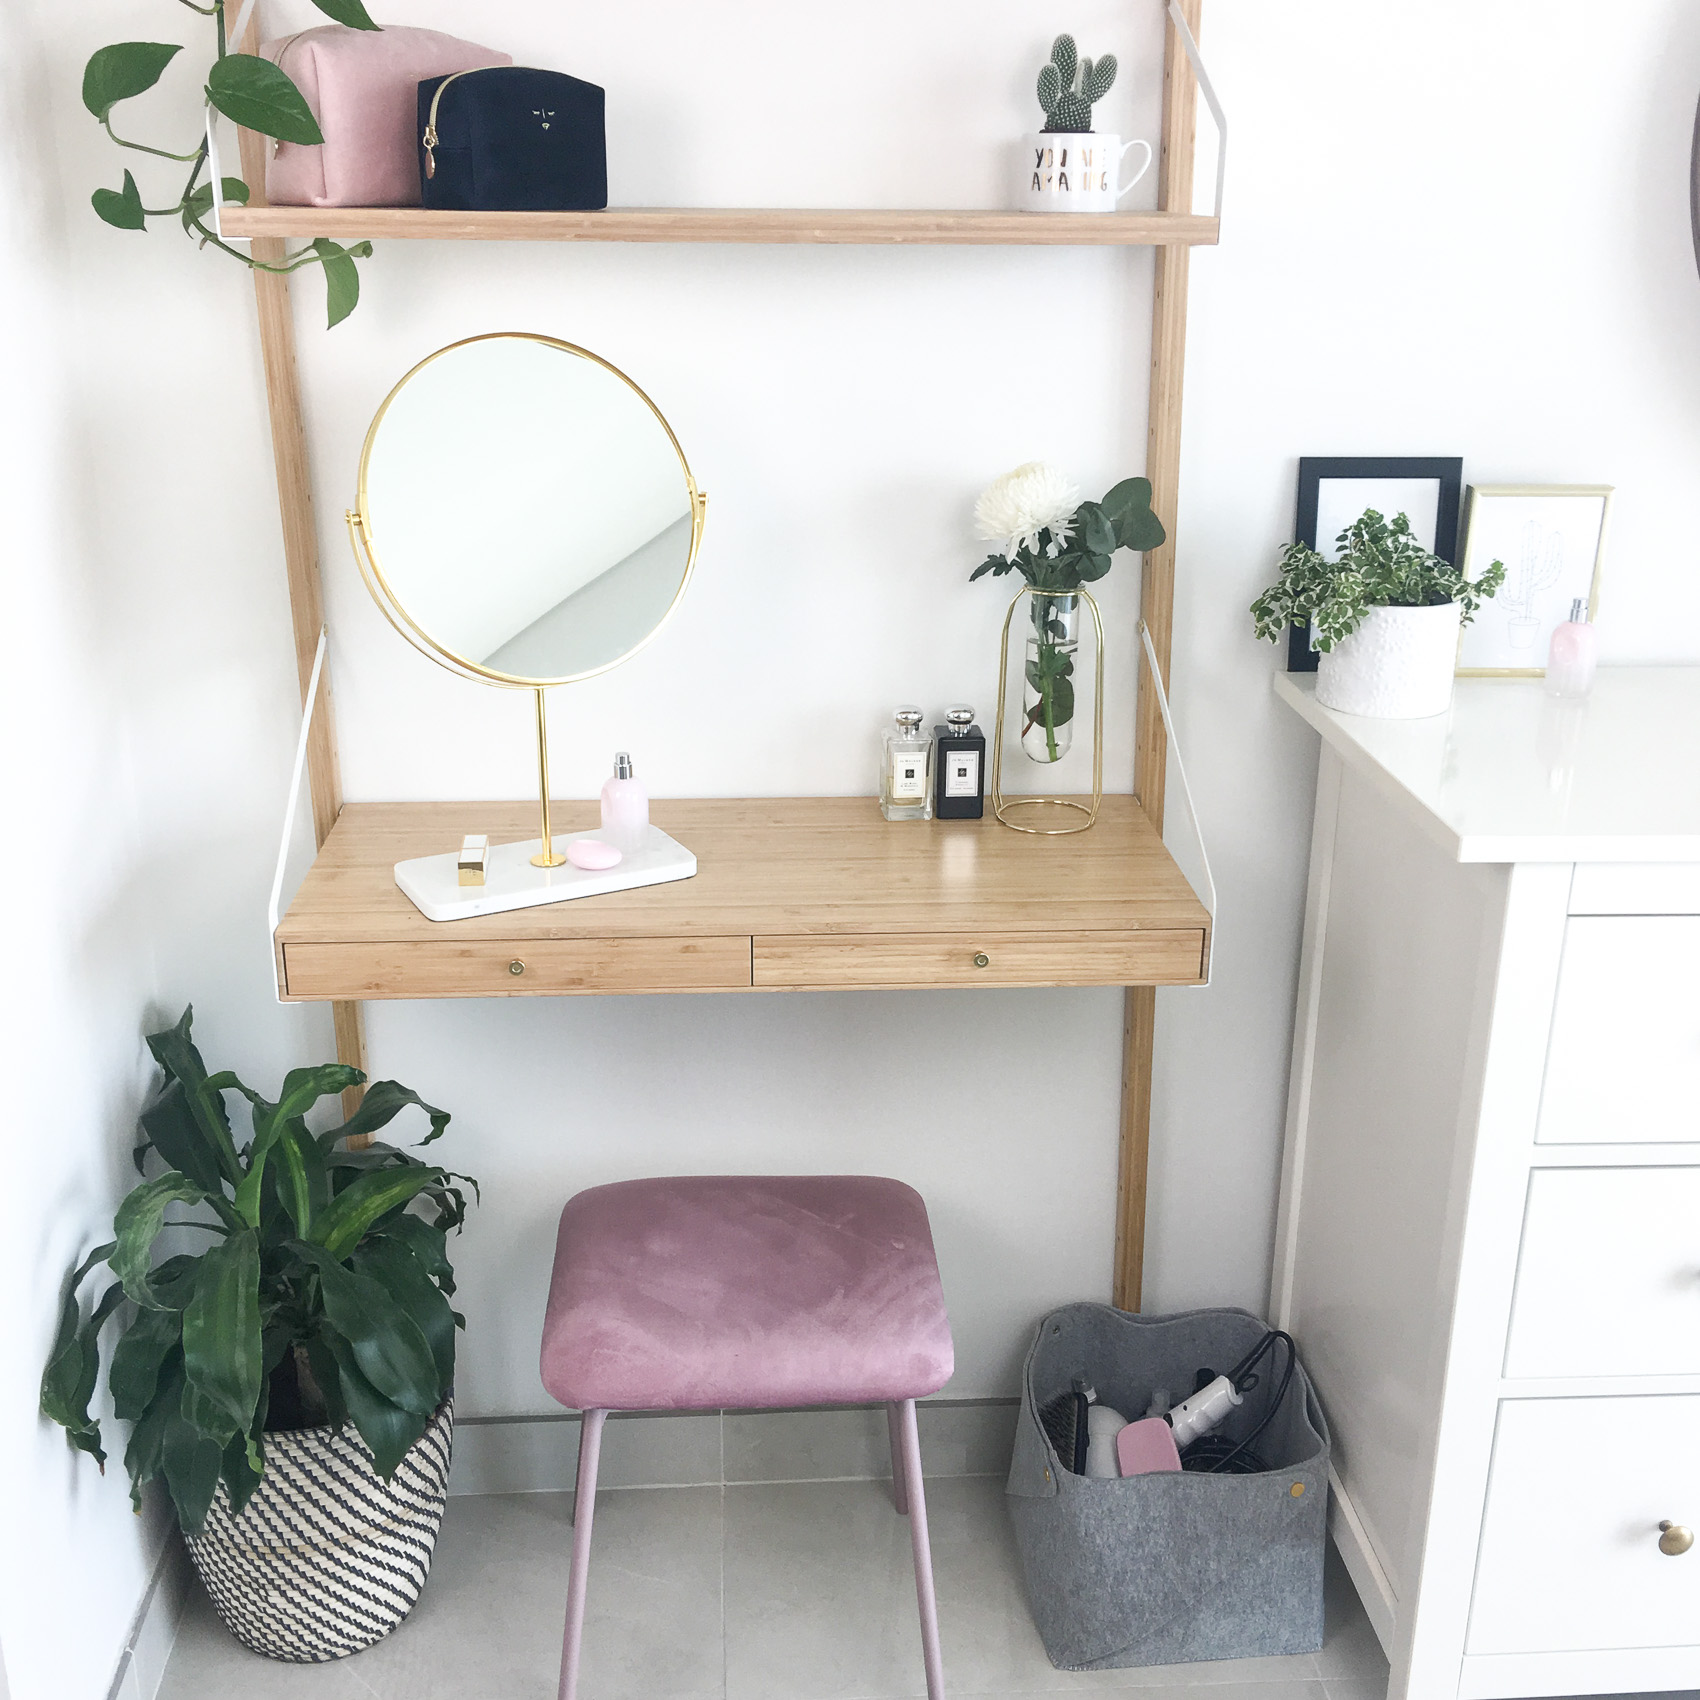 kea Pudda Basket-Ikea SVALNAS-Wall-mounted workspace combination bamboo -Zara Home FREE STANDING MIRROR WITH MARBLE BASE-Sostrene grene pink velvet stool